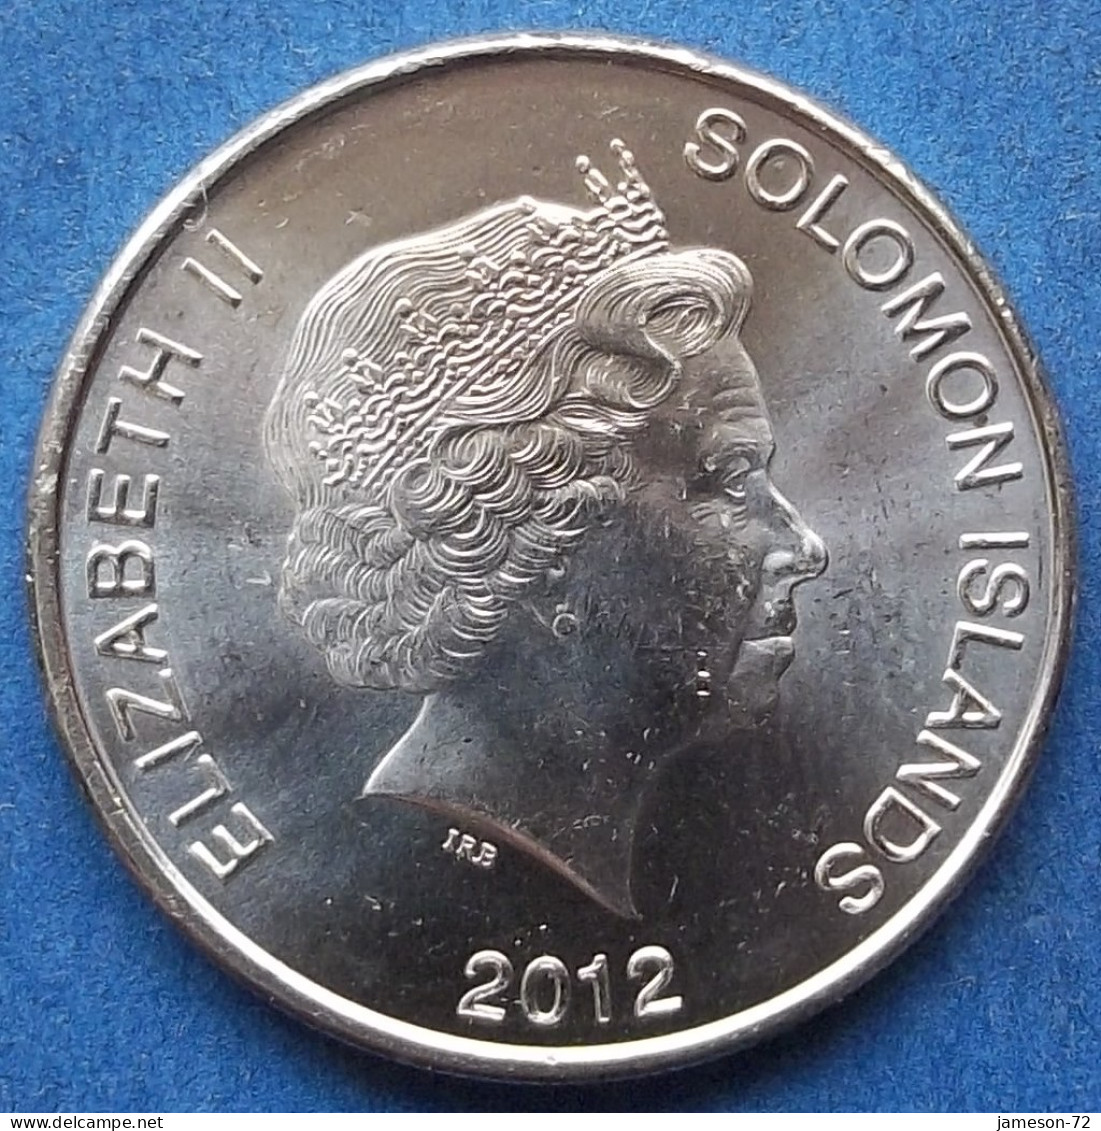 SOLOMON ISLANDS - 50 Censt 2012 "Eagle Spirit" KM# 237 Commonwealth Nation, Elizabeth II - Edelweiss Coins - Salomon